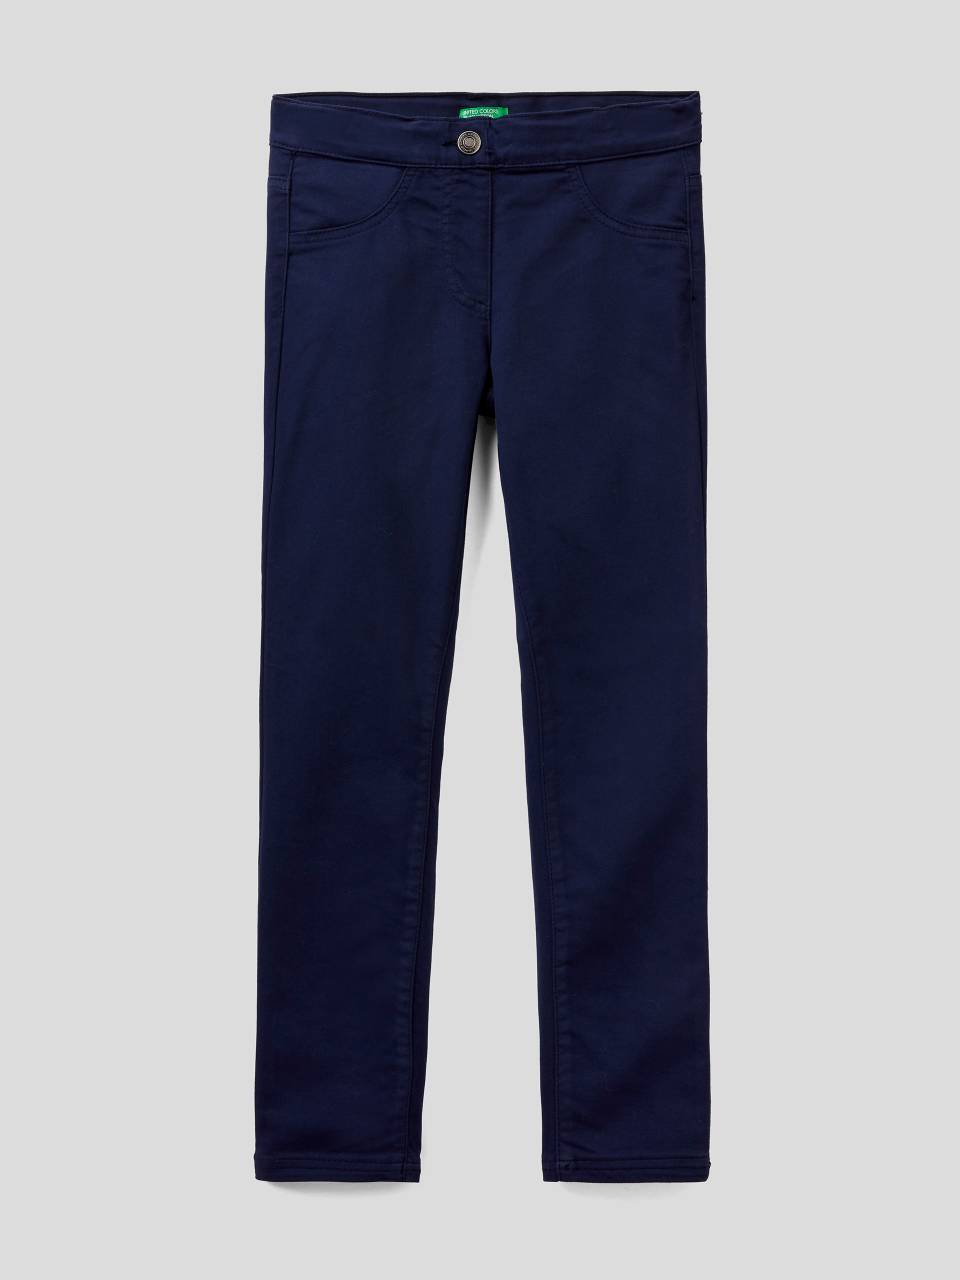 Navy Blue 4Y United colors of benetton slacks discount 79% KIDS FASHION Trousers Elegant 